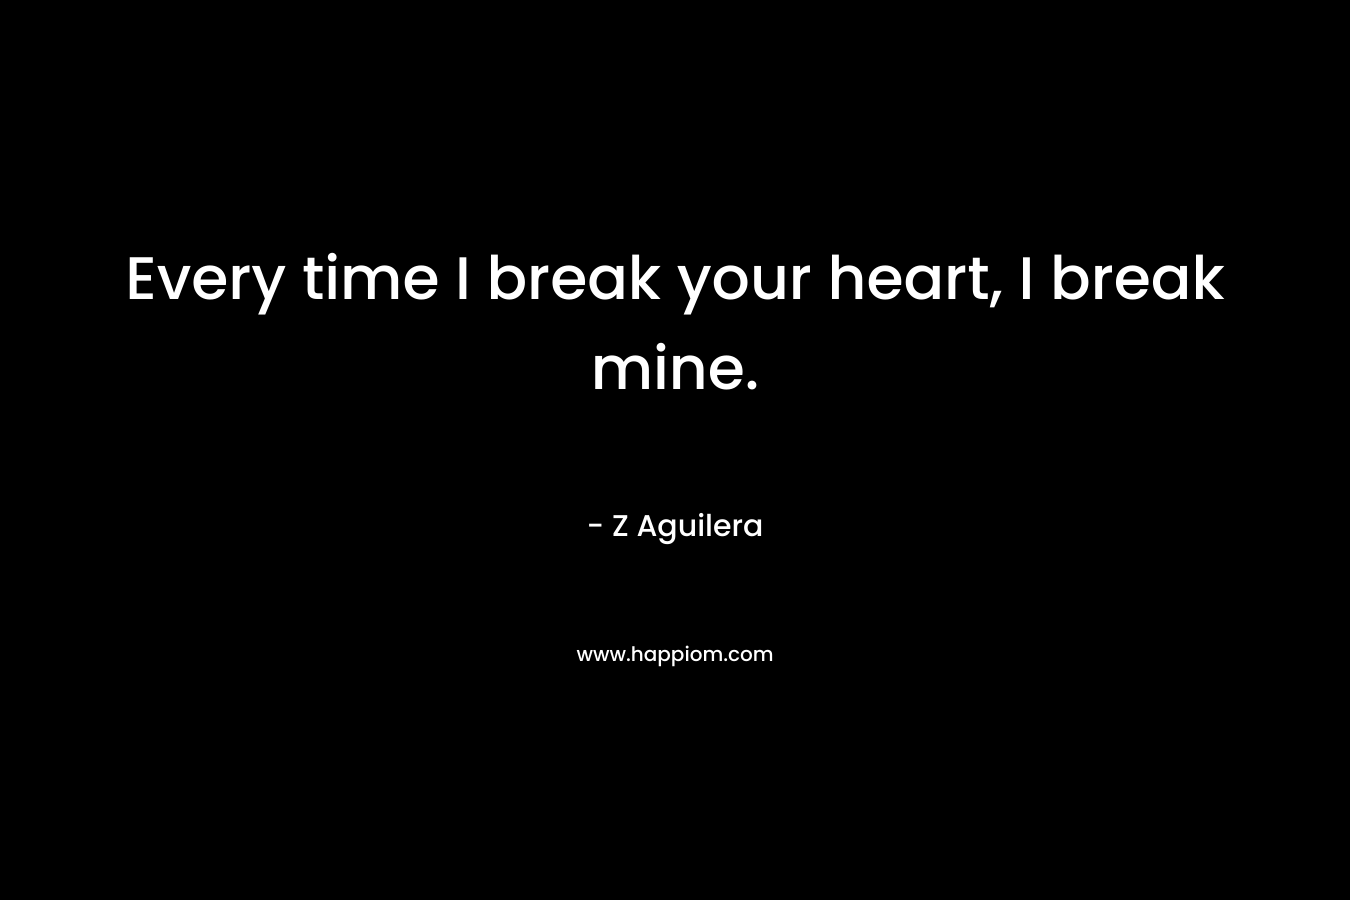 Every time I break your heart, I break mine. – Z Aguilera